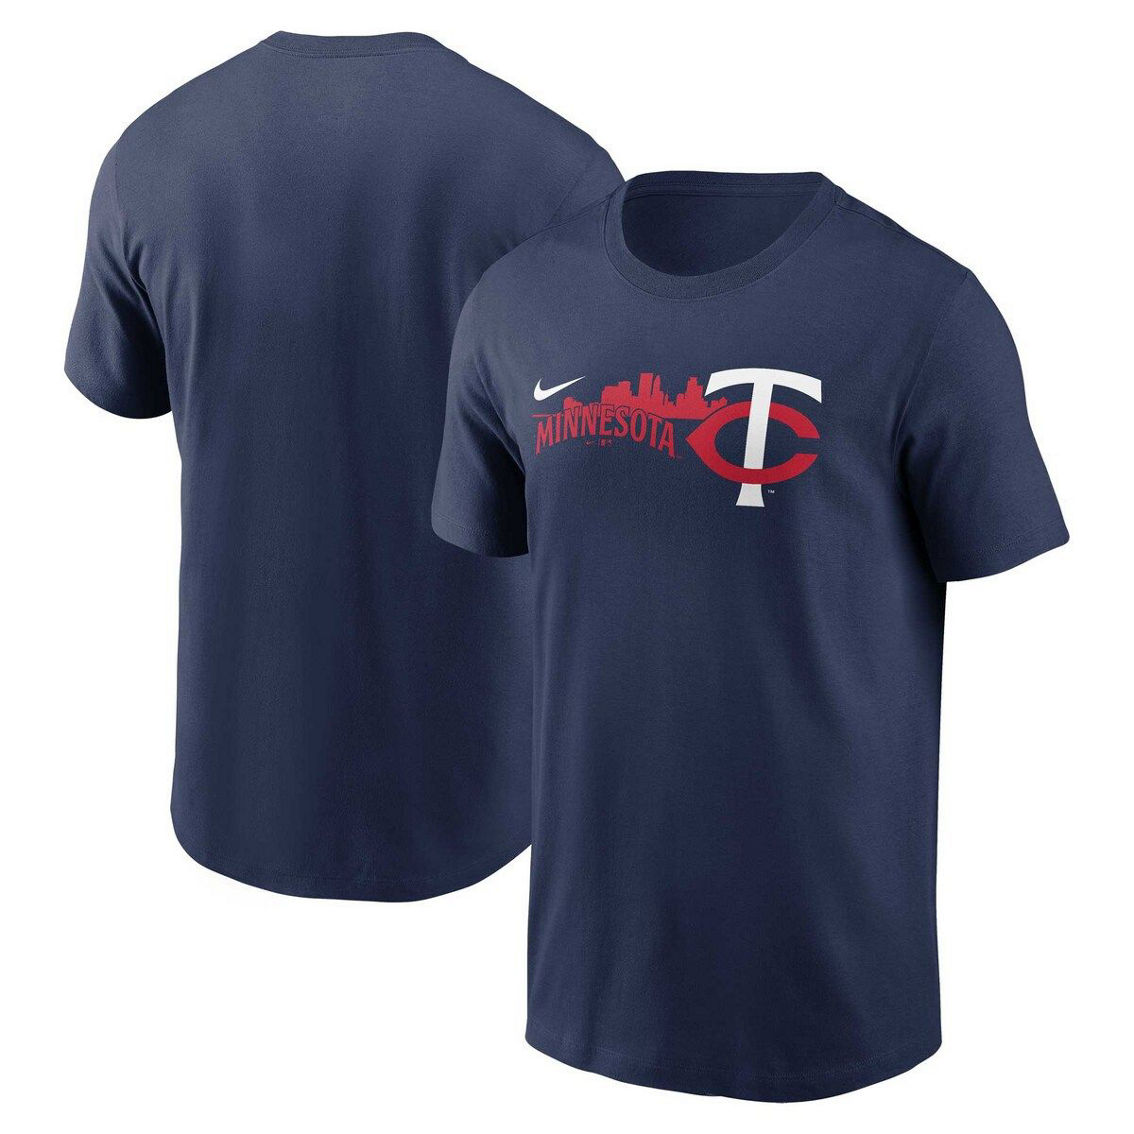 Nike Men's Navy Minnesota Twins Local Team Skyline T-Shirt - Image 2 of 4